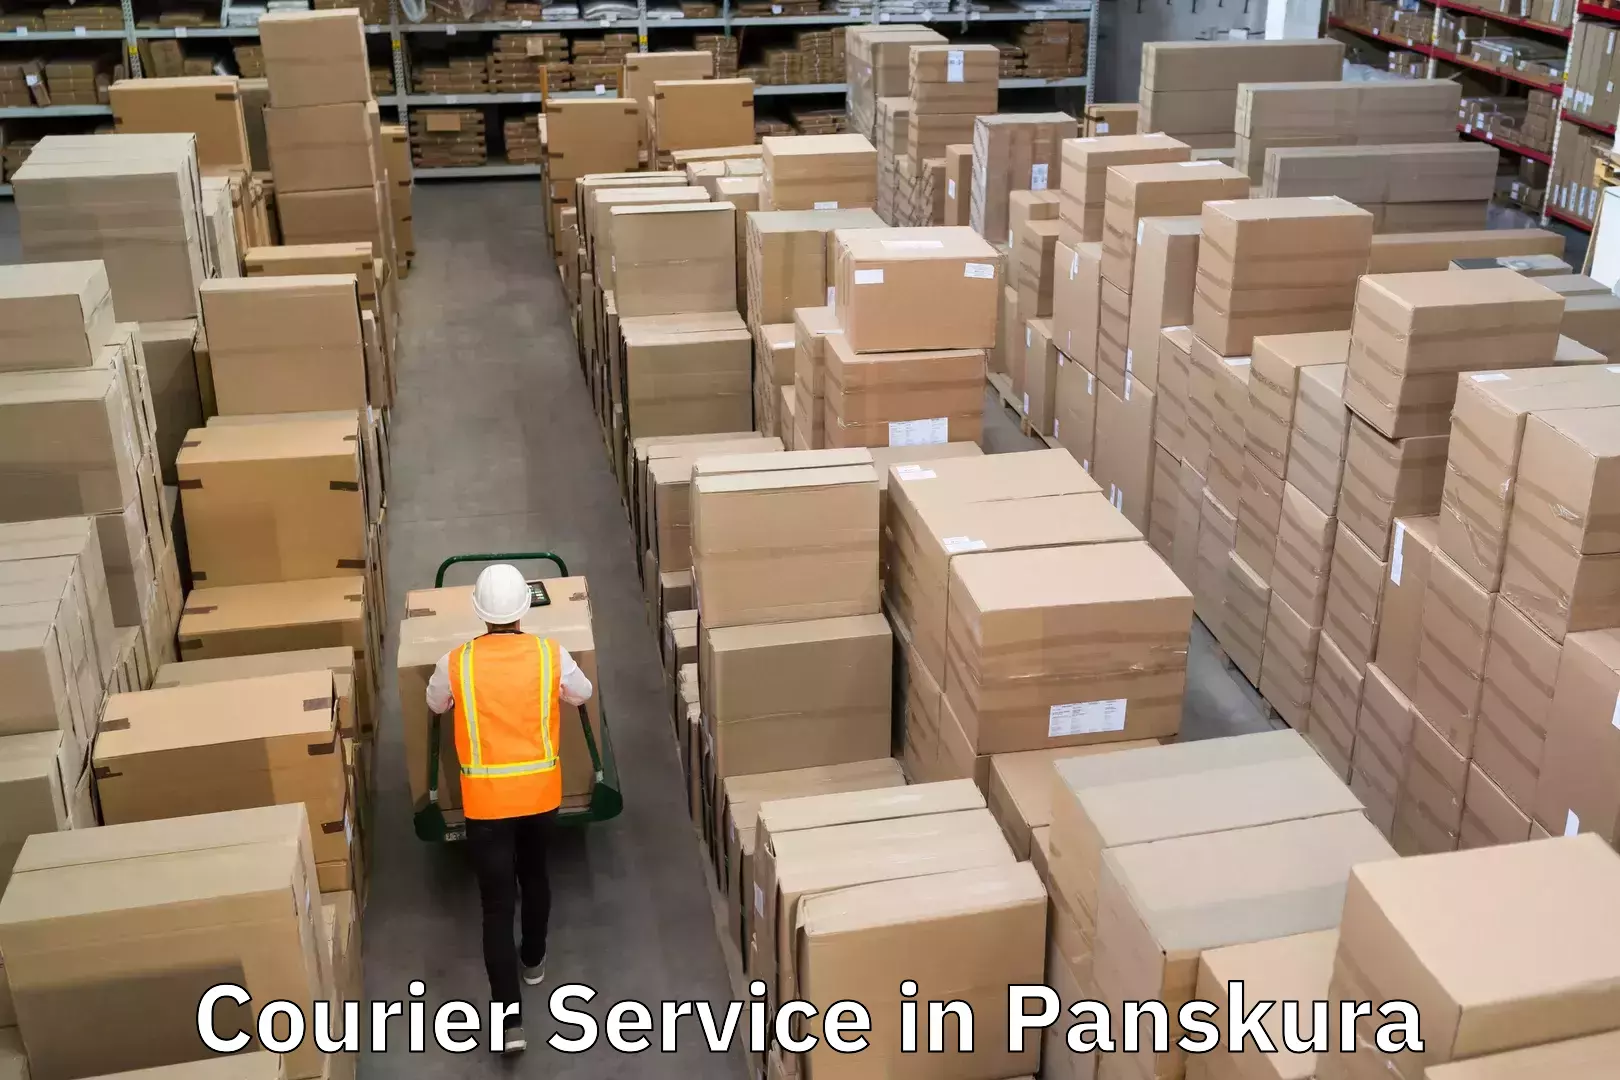 Customer-focused courier in Panskura